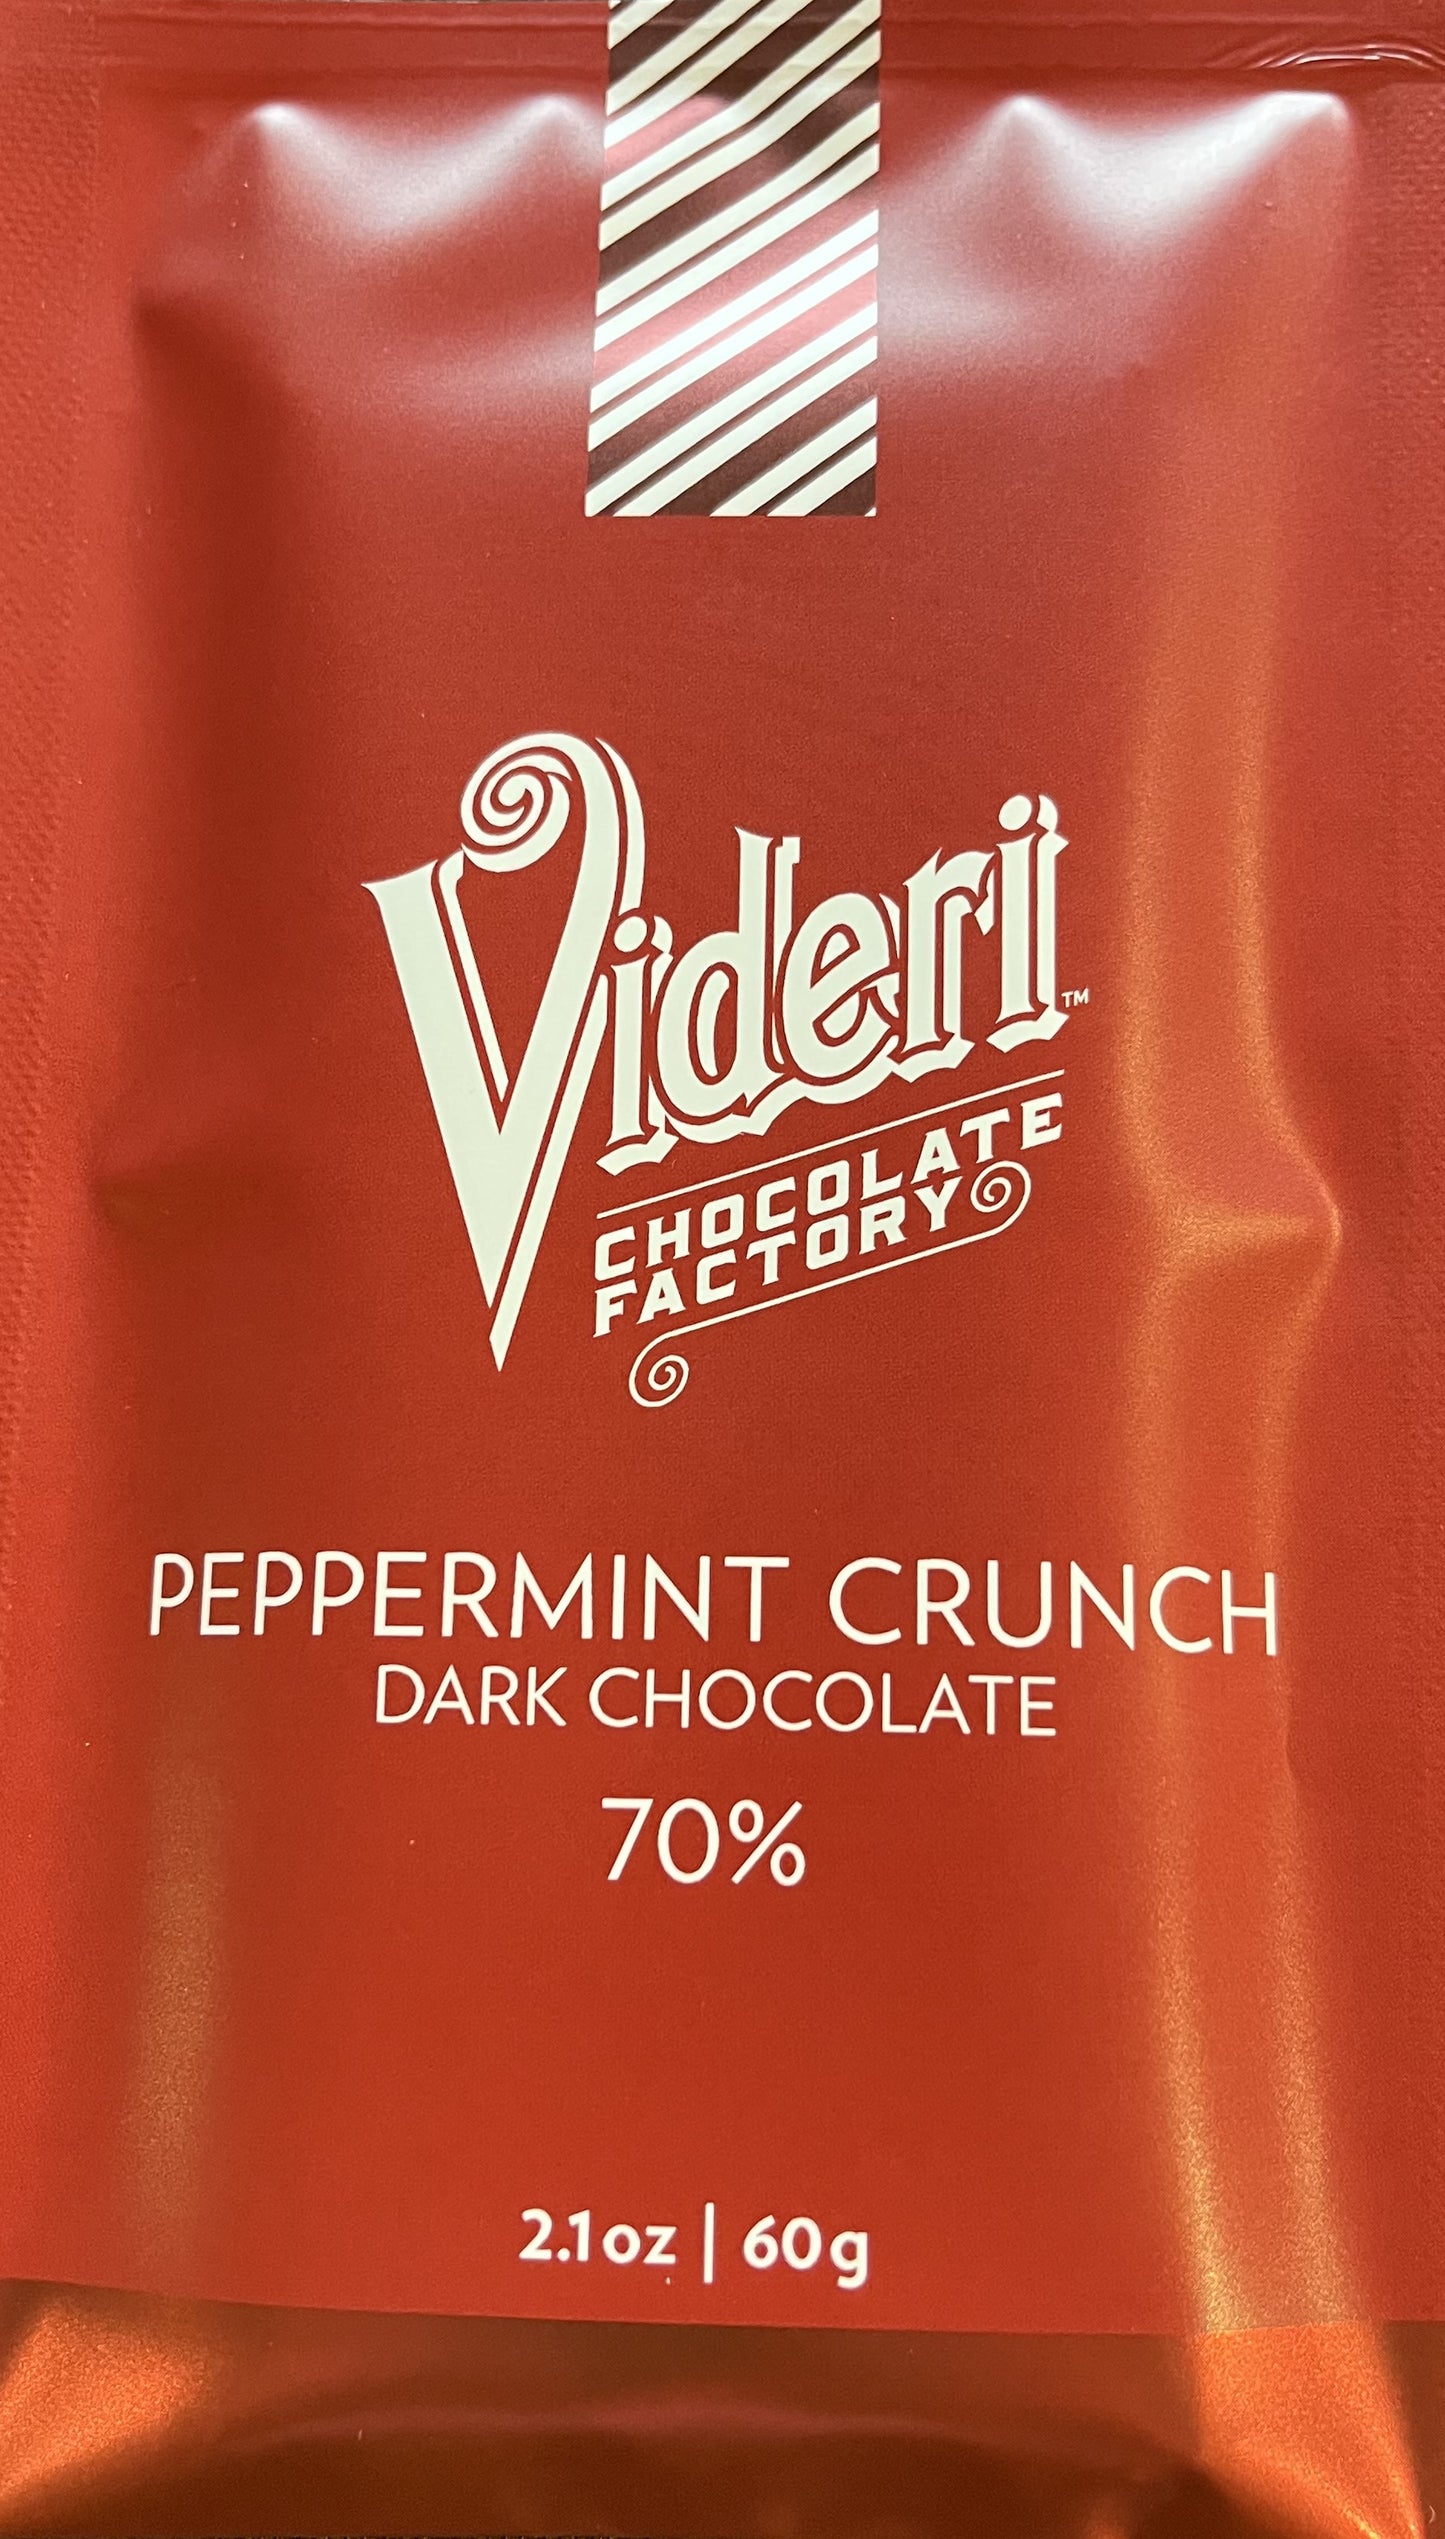 Videri Peppermint Crunch 70% Dark Chocolate